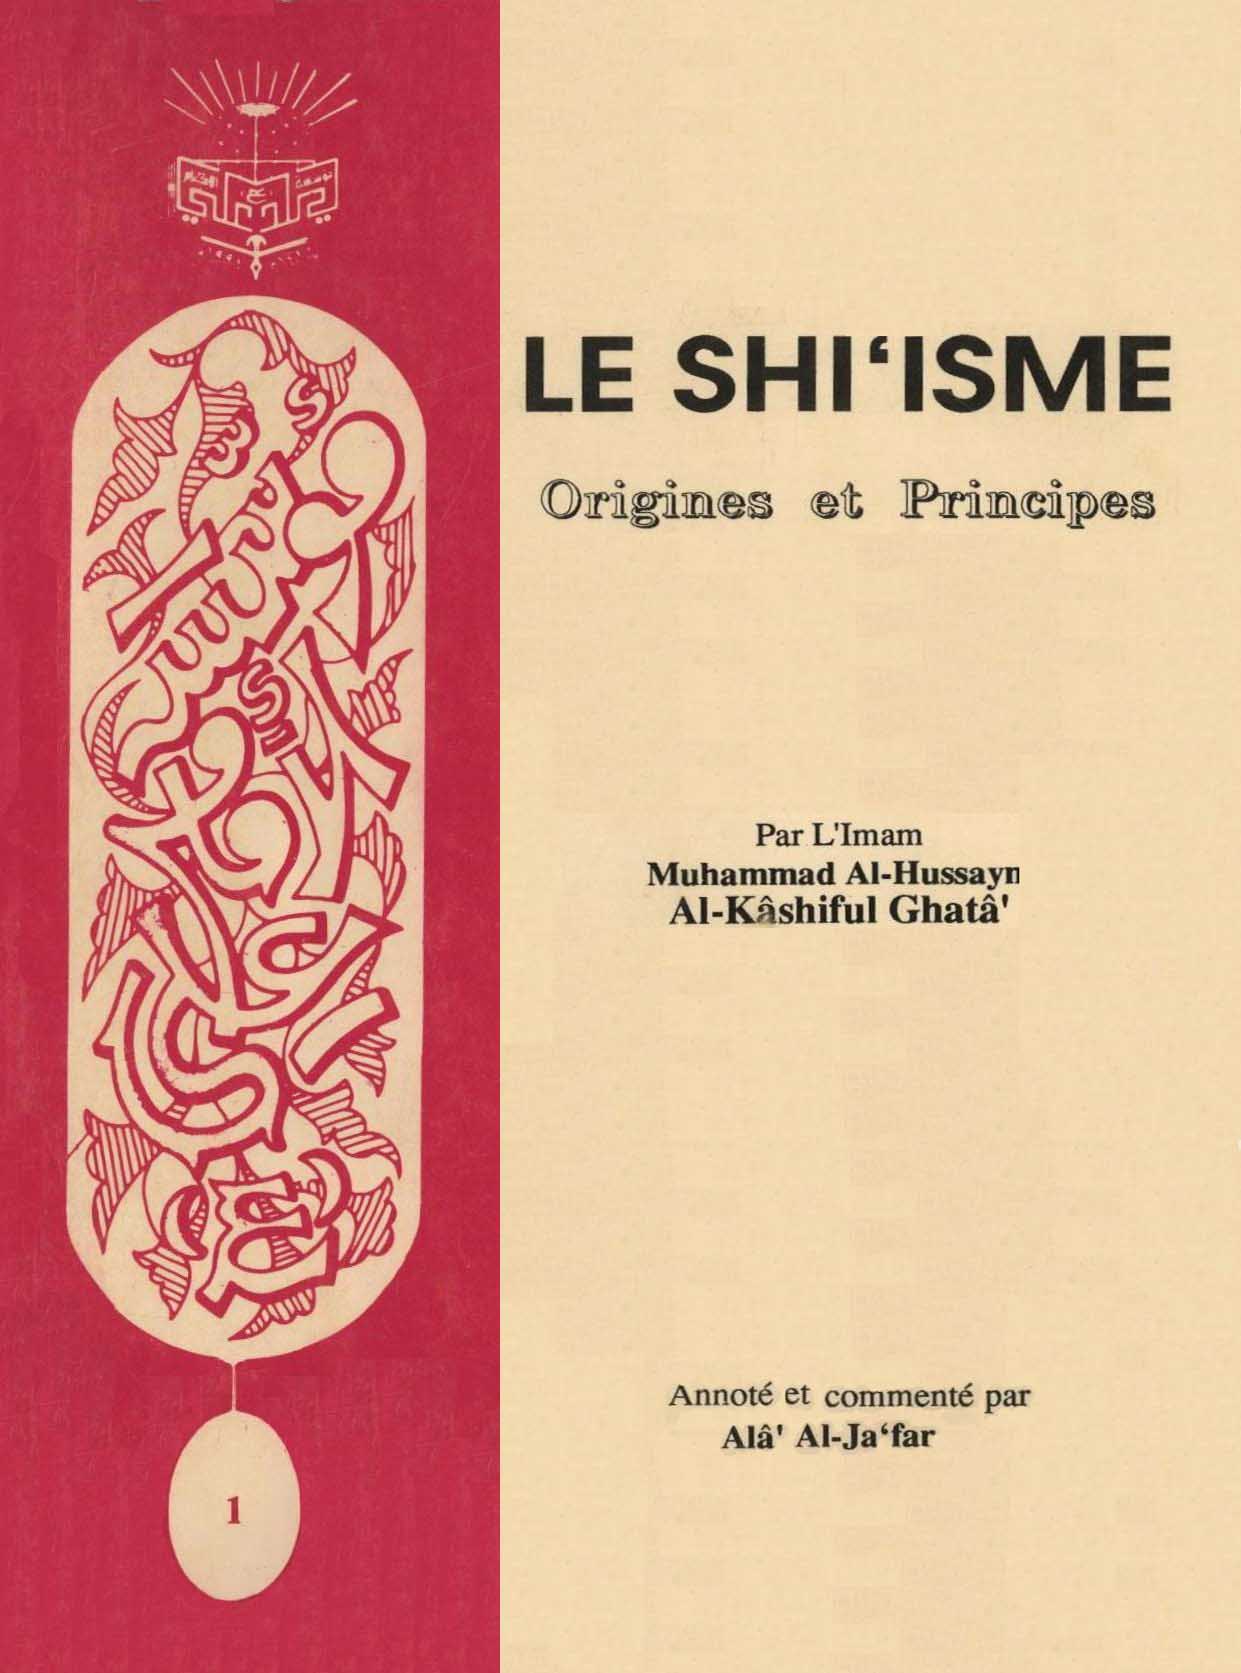 Le shi’isme origines et principes